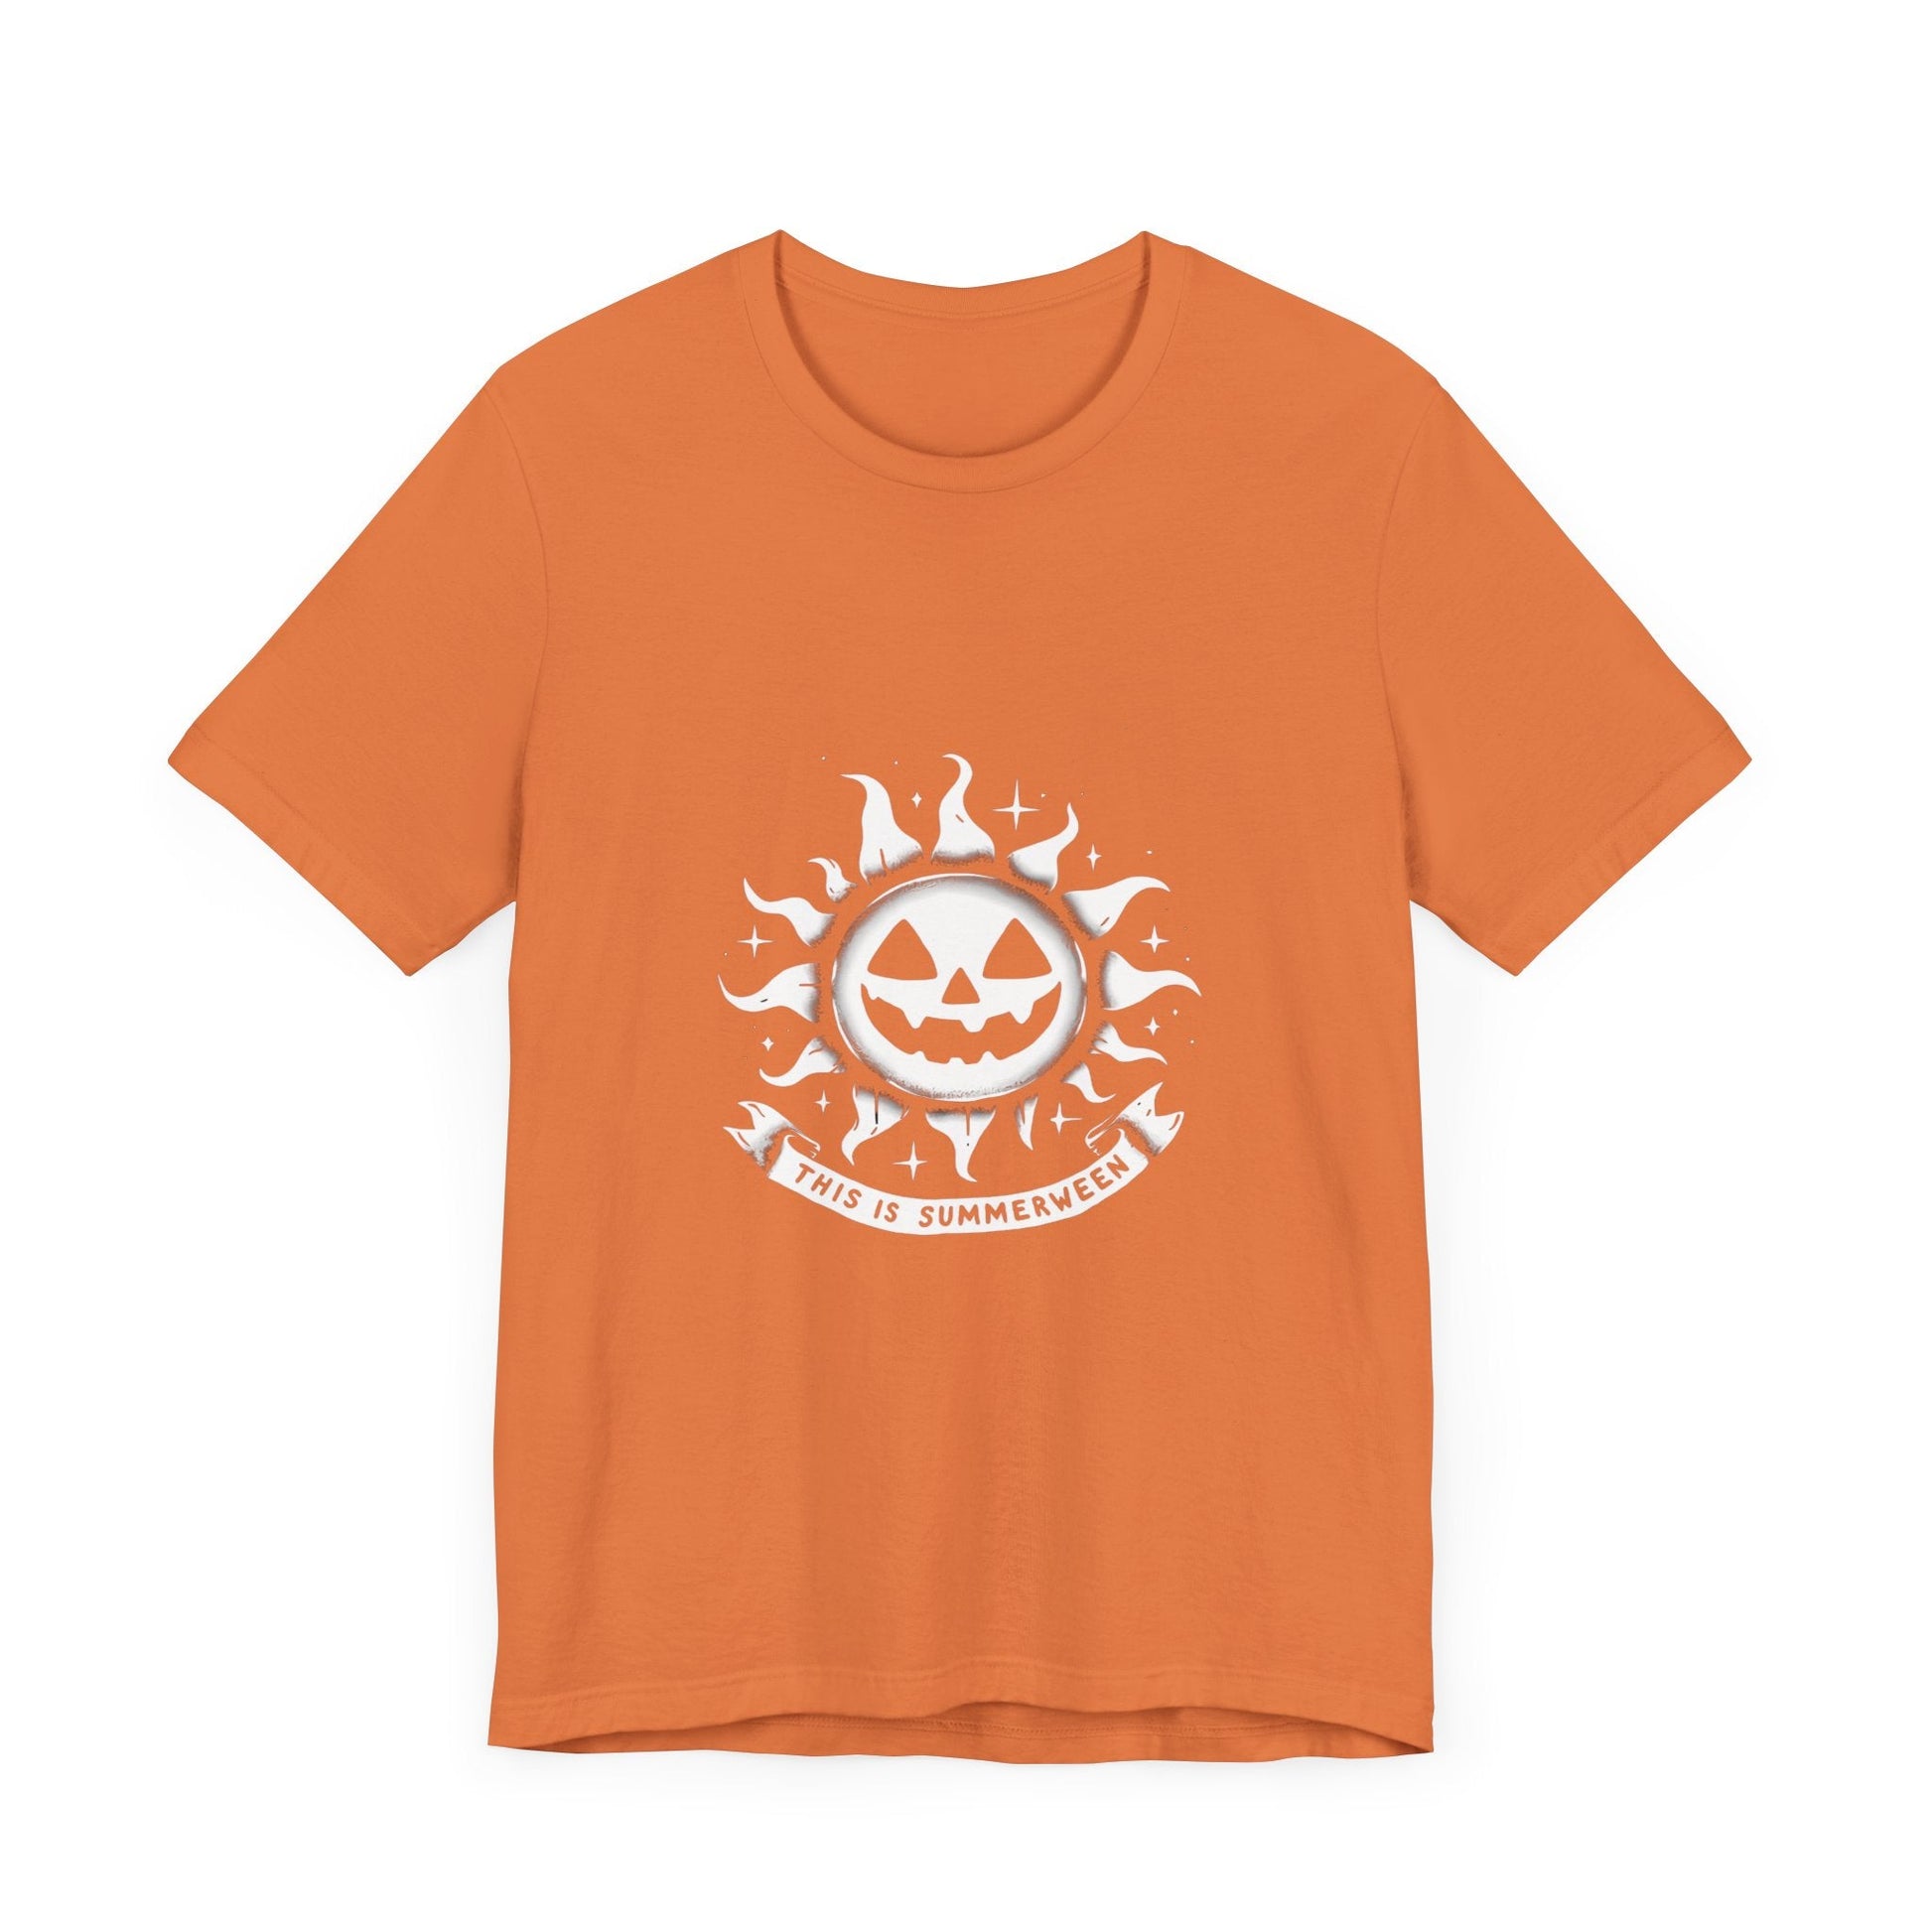 This Is Summerween Short Sleeve Tee ShirtT - ShirtVTZdesignsBurnt OrangeXSclothingCottonCrew neck